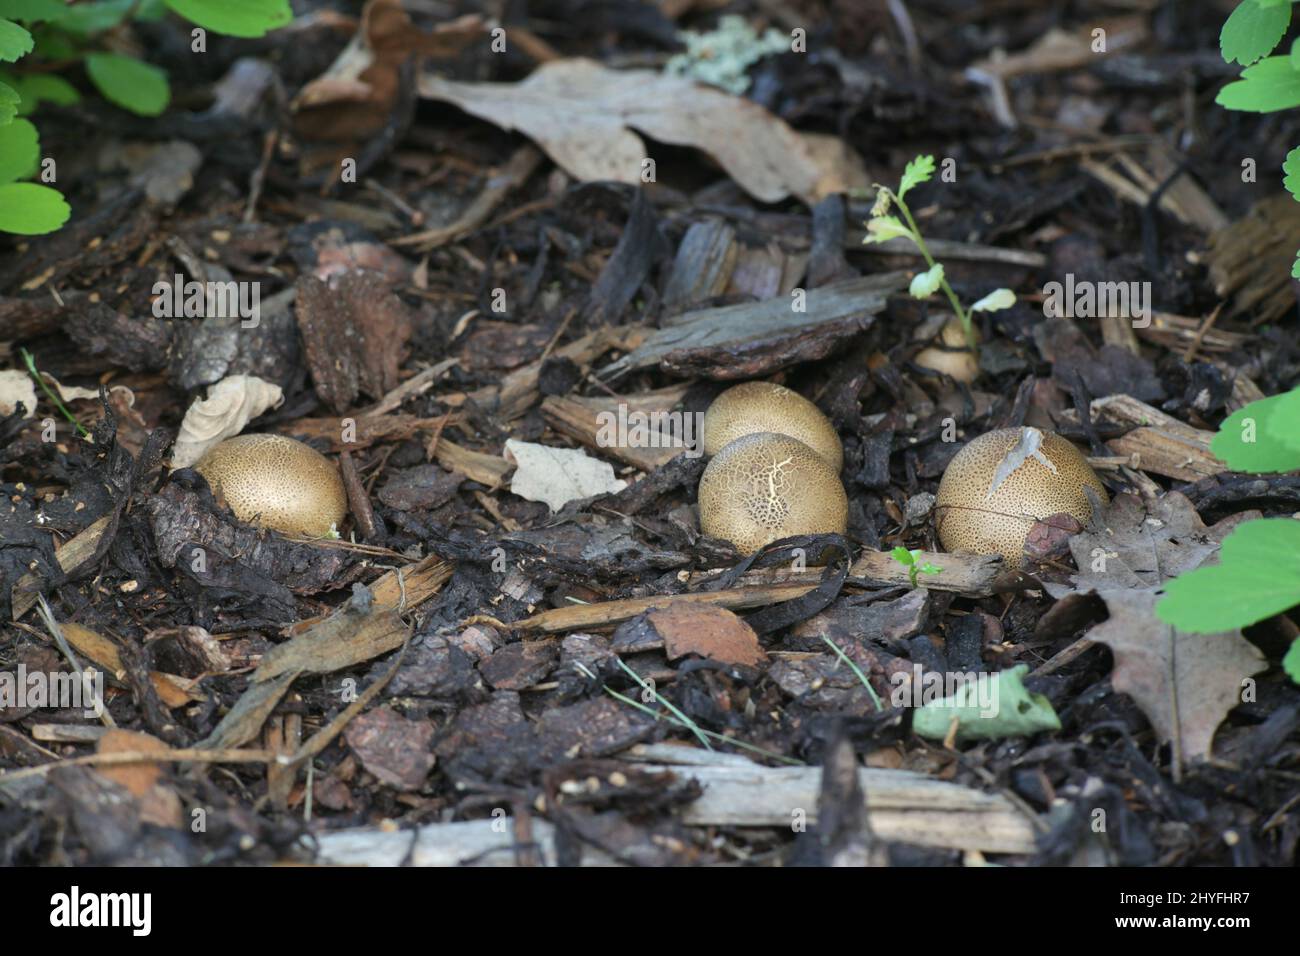 Scleroderma bovista (Scleroderma verrucosum var. bovista), known as Potato Earthball, wild mushroom from Finland Stock Photo